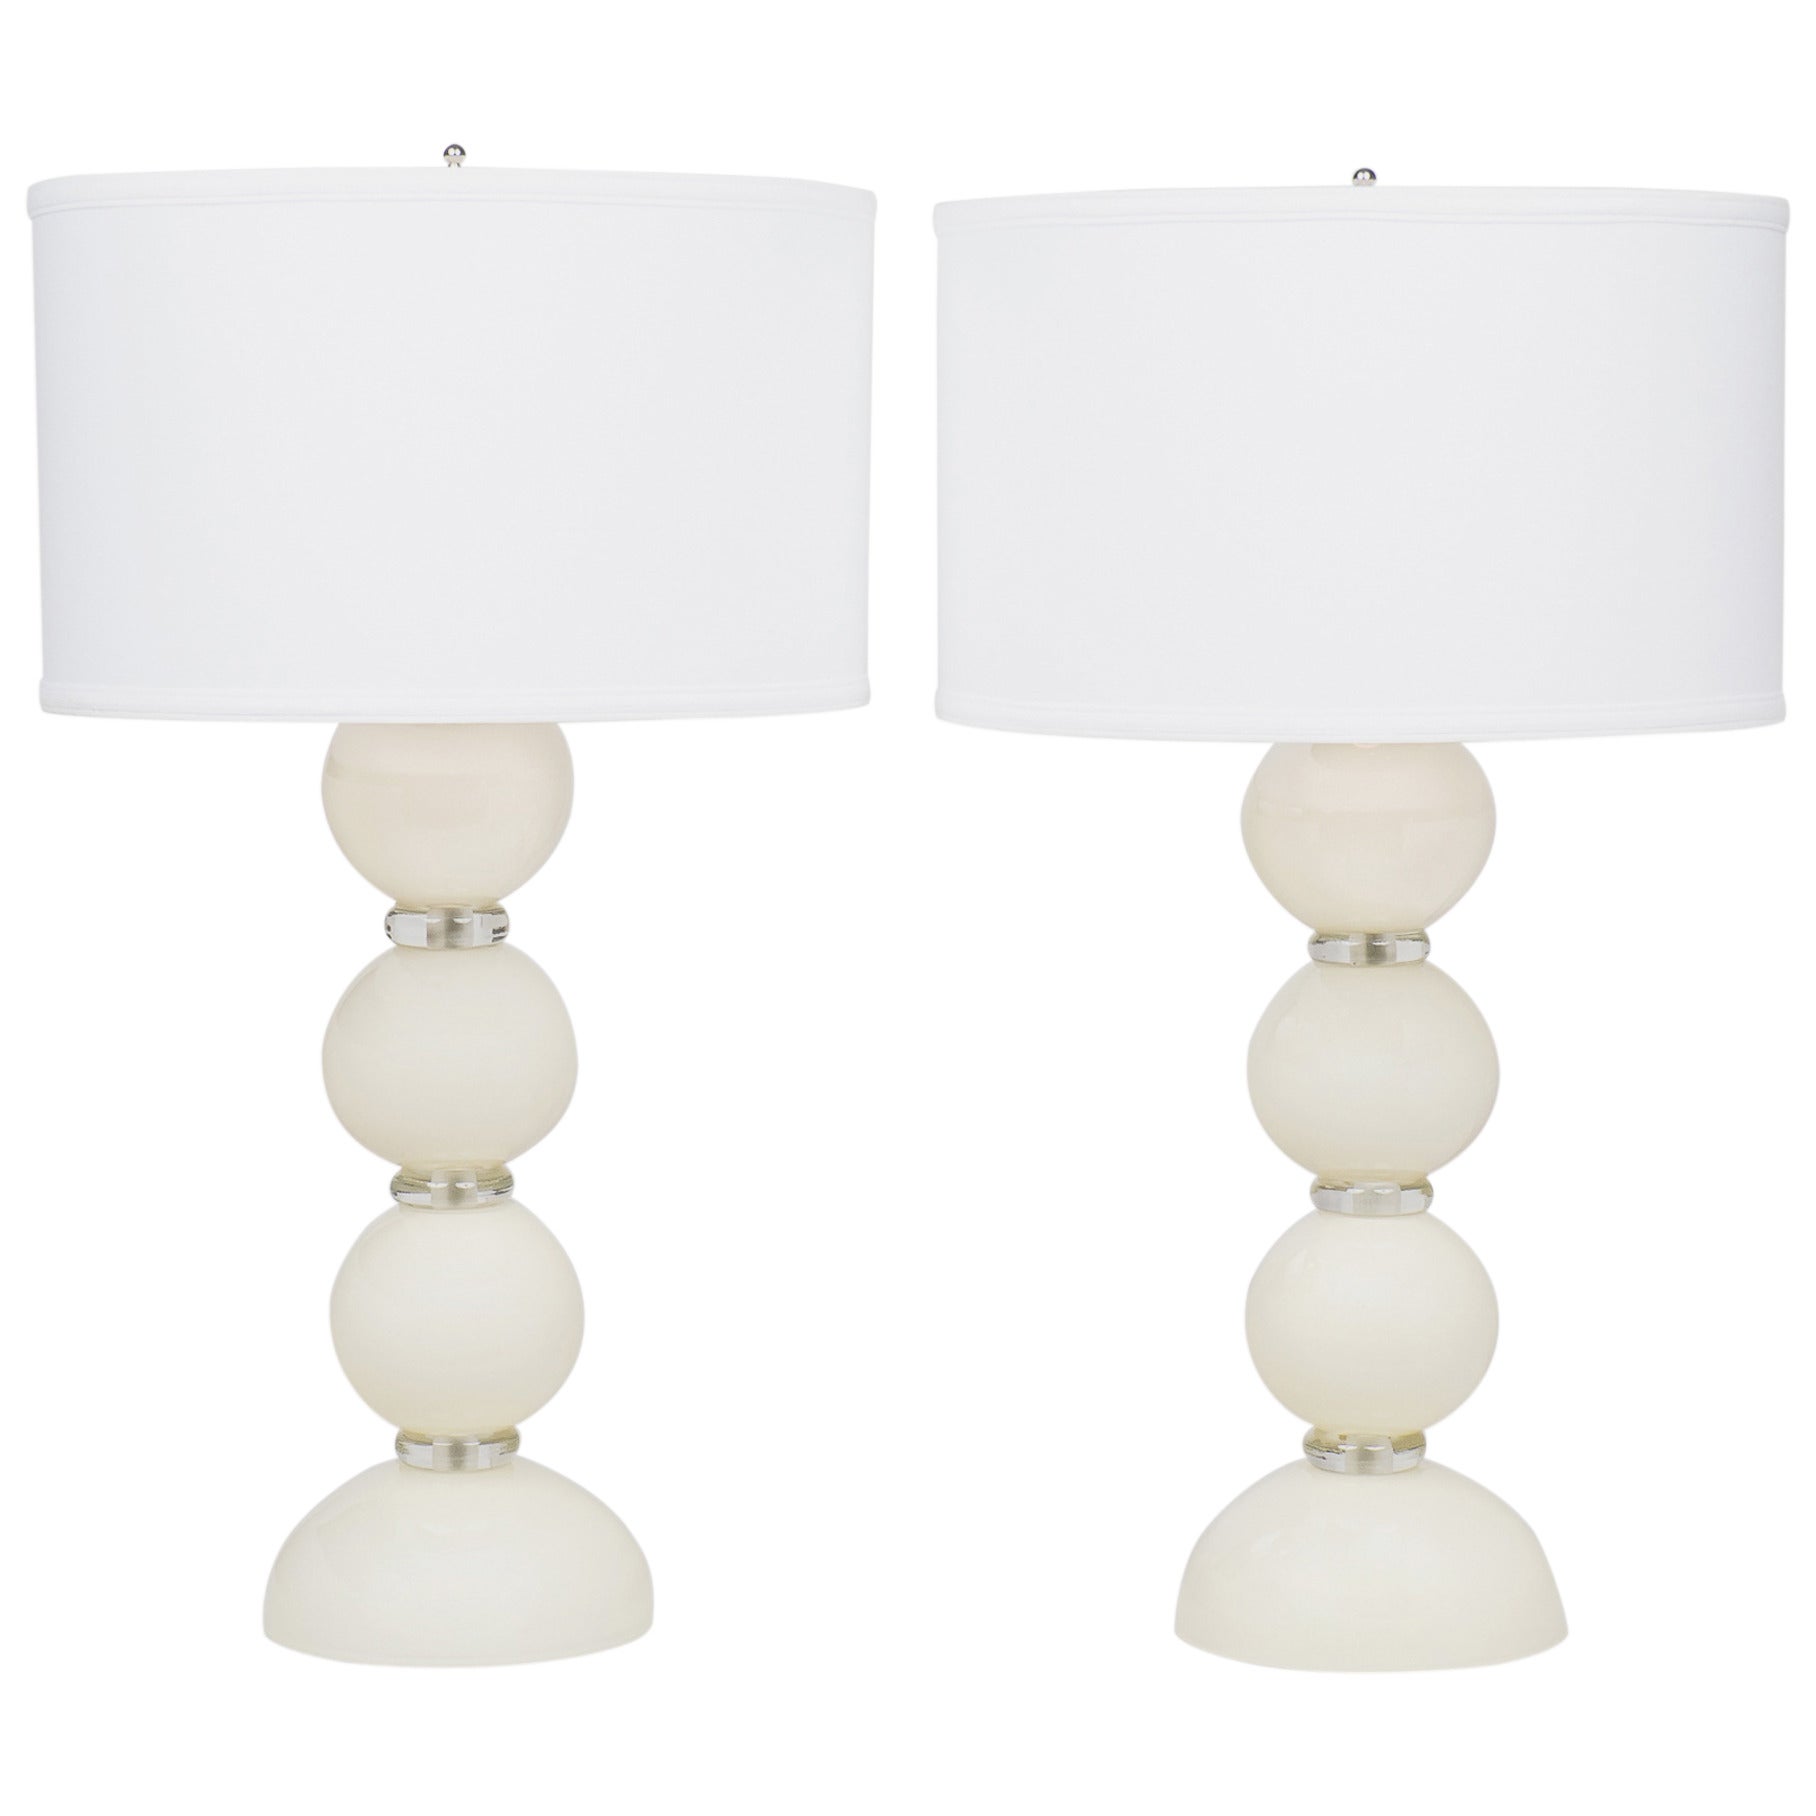 Murano Ivory Glass Pair of Lamps